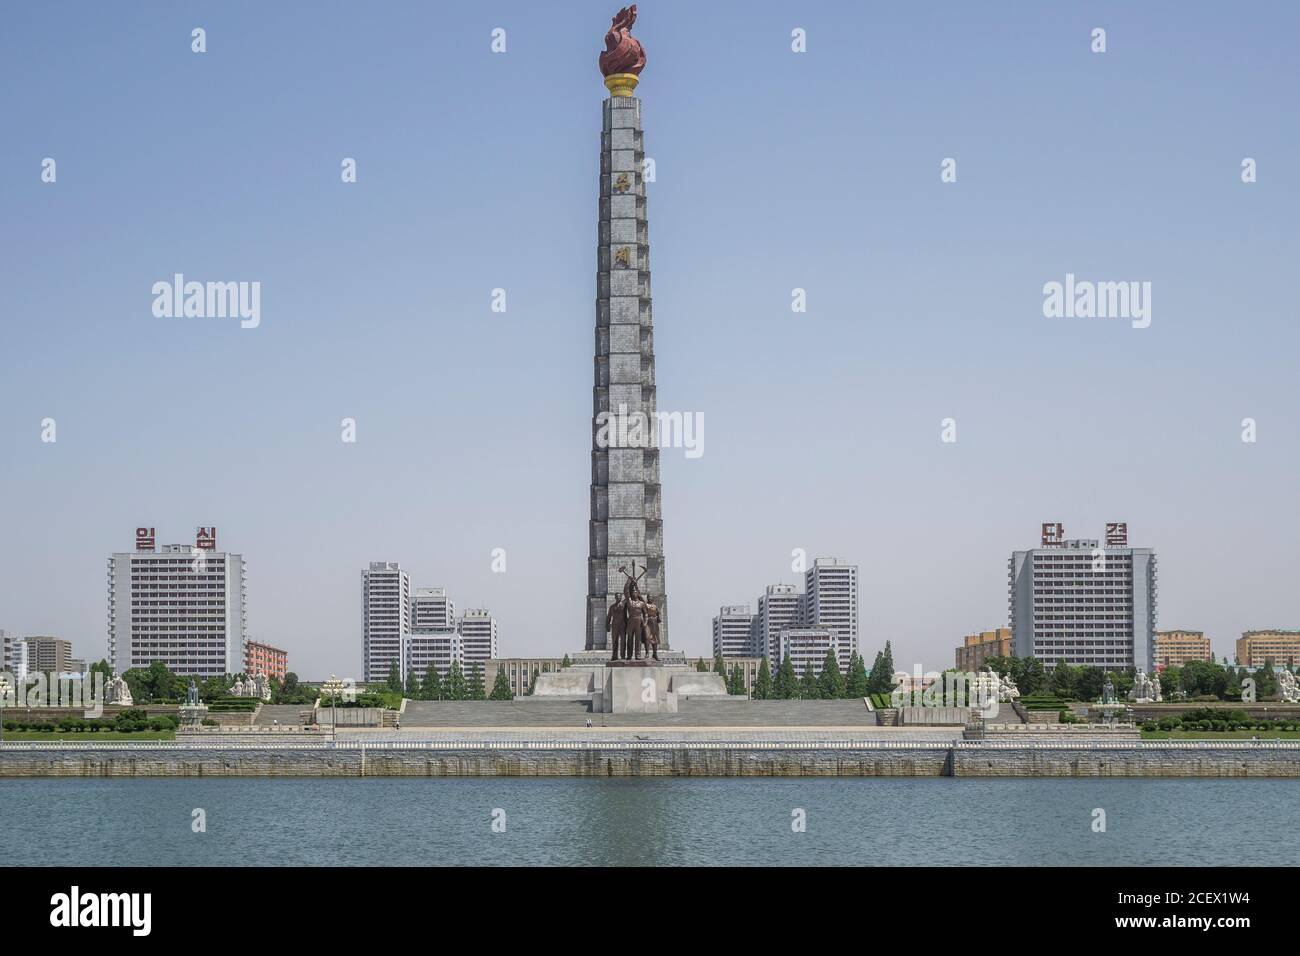 Juche Tower, Tower of the Juche Idea in Pyongyang, North Korea Stock Photo